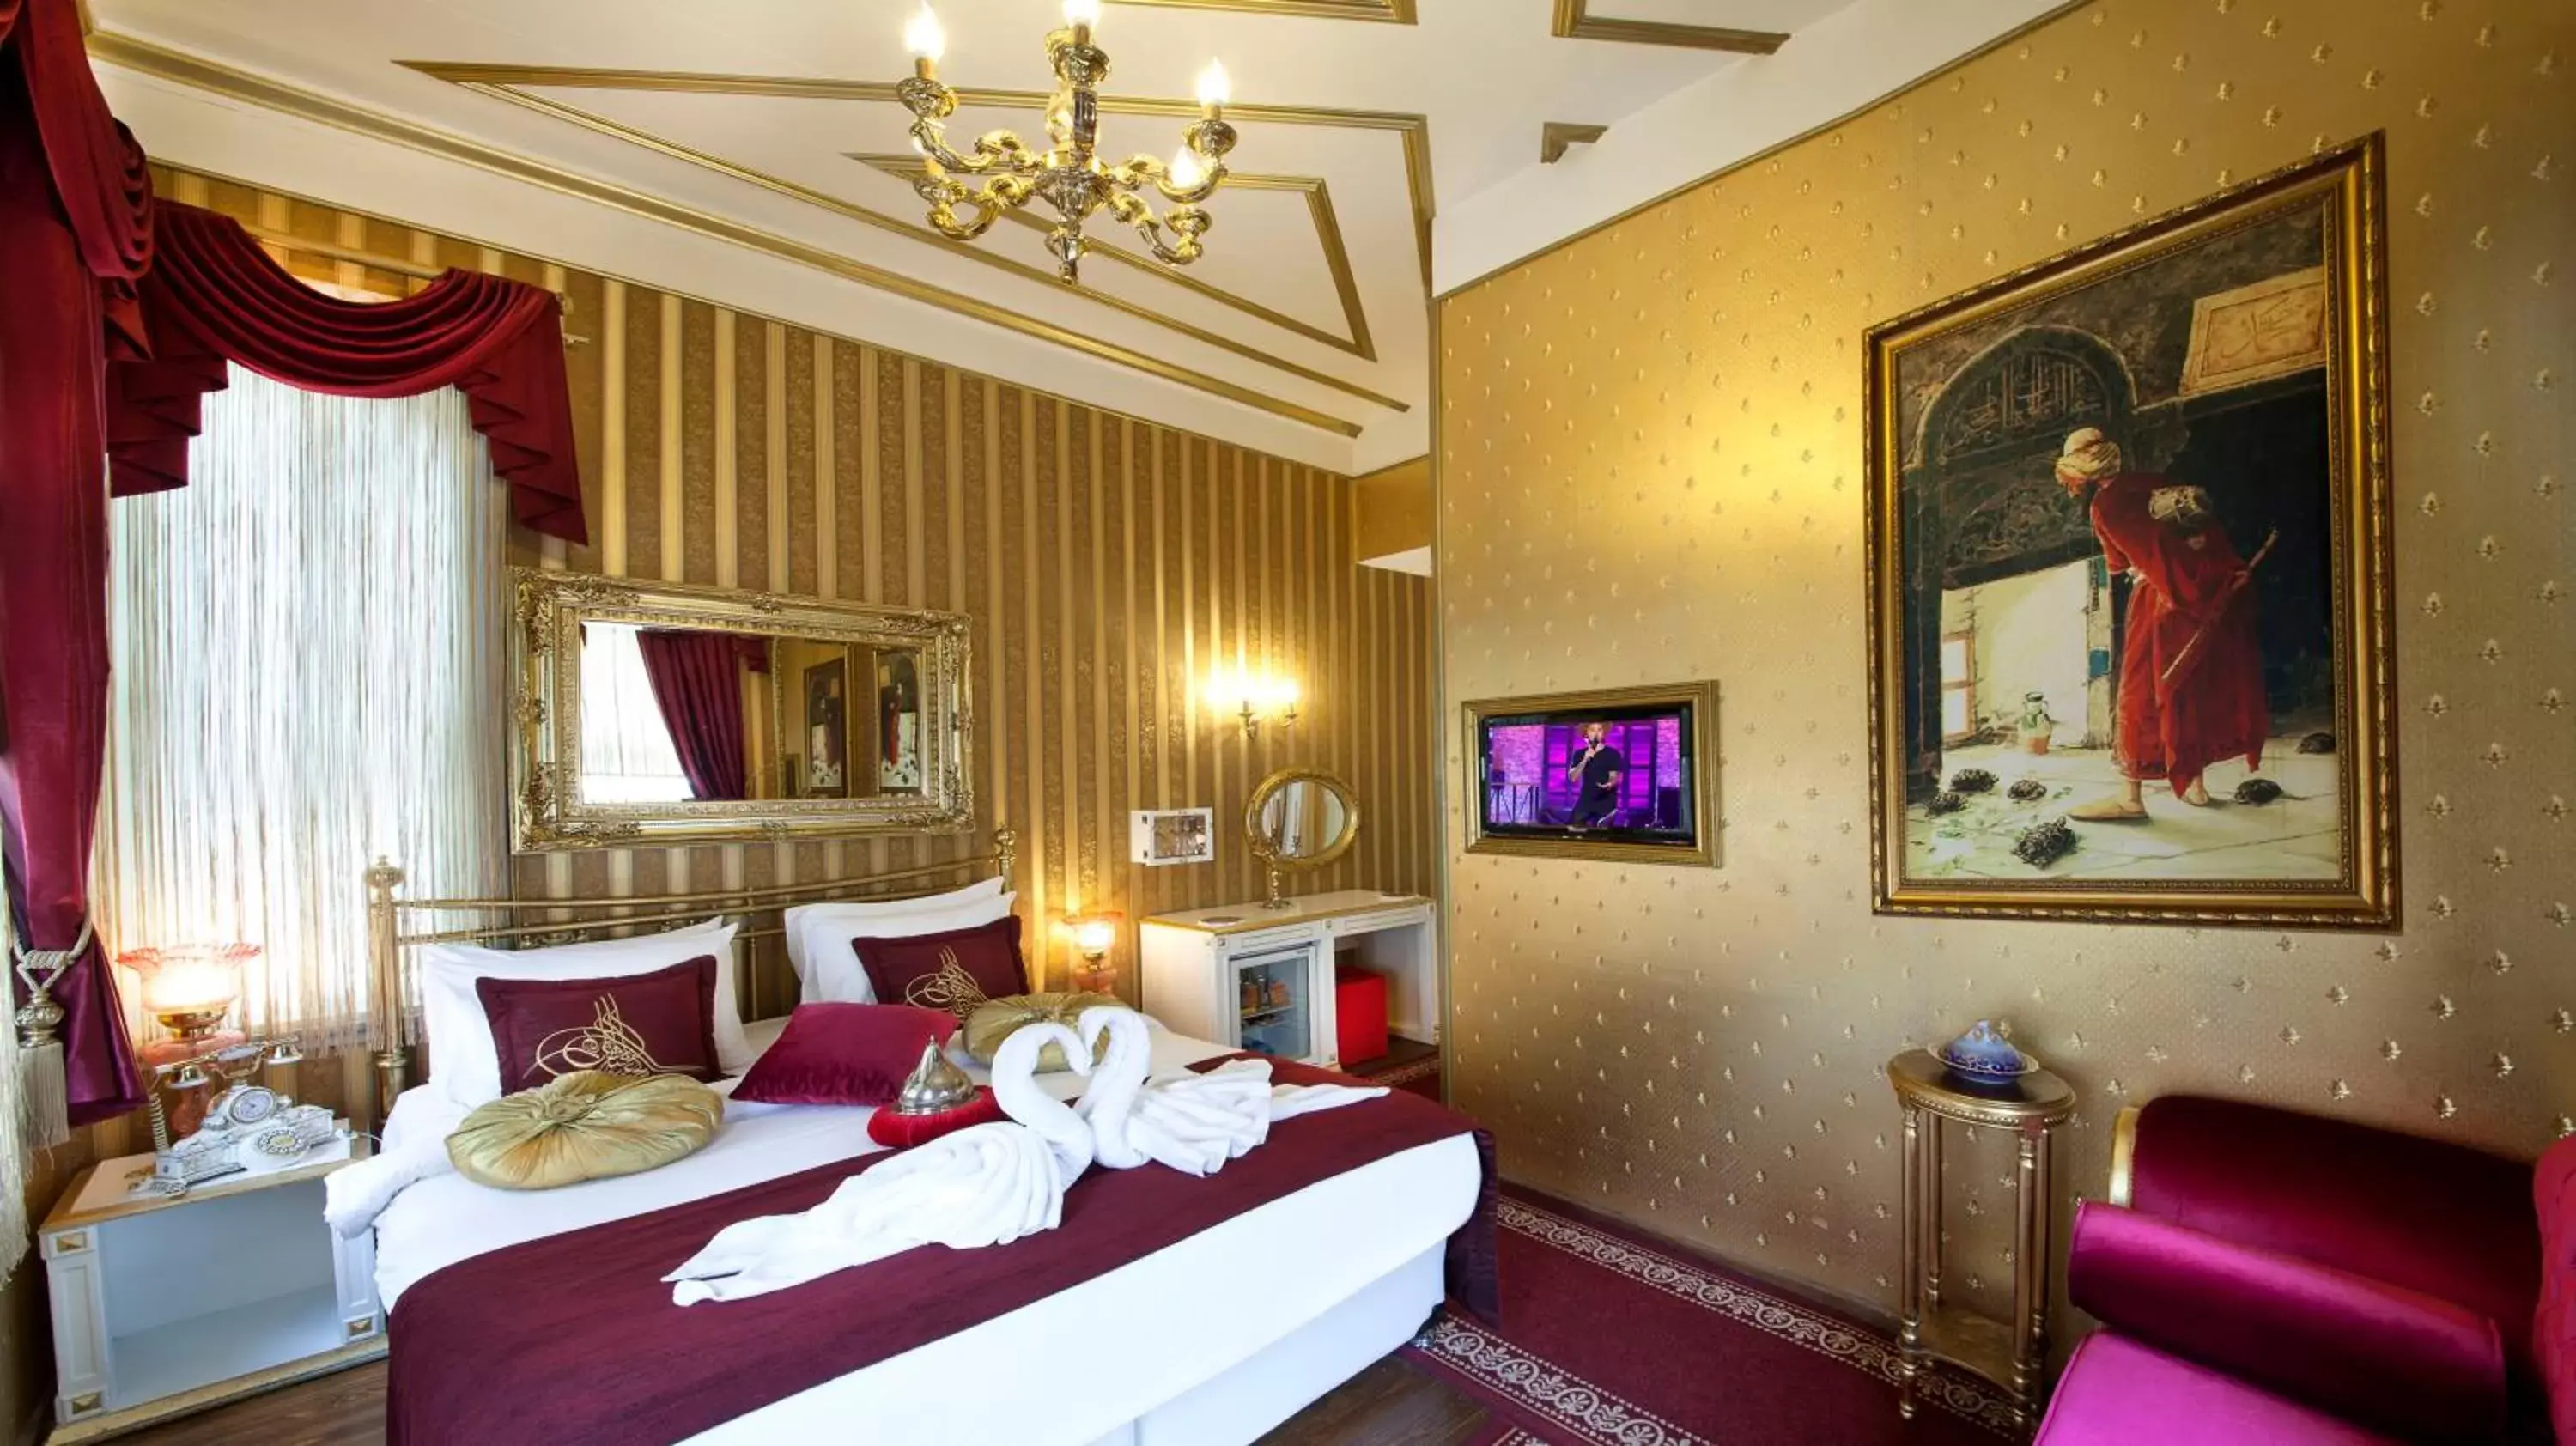 Bed, Room Photo in Sultan Tughra Hotel